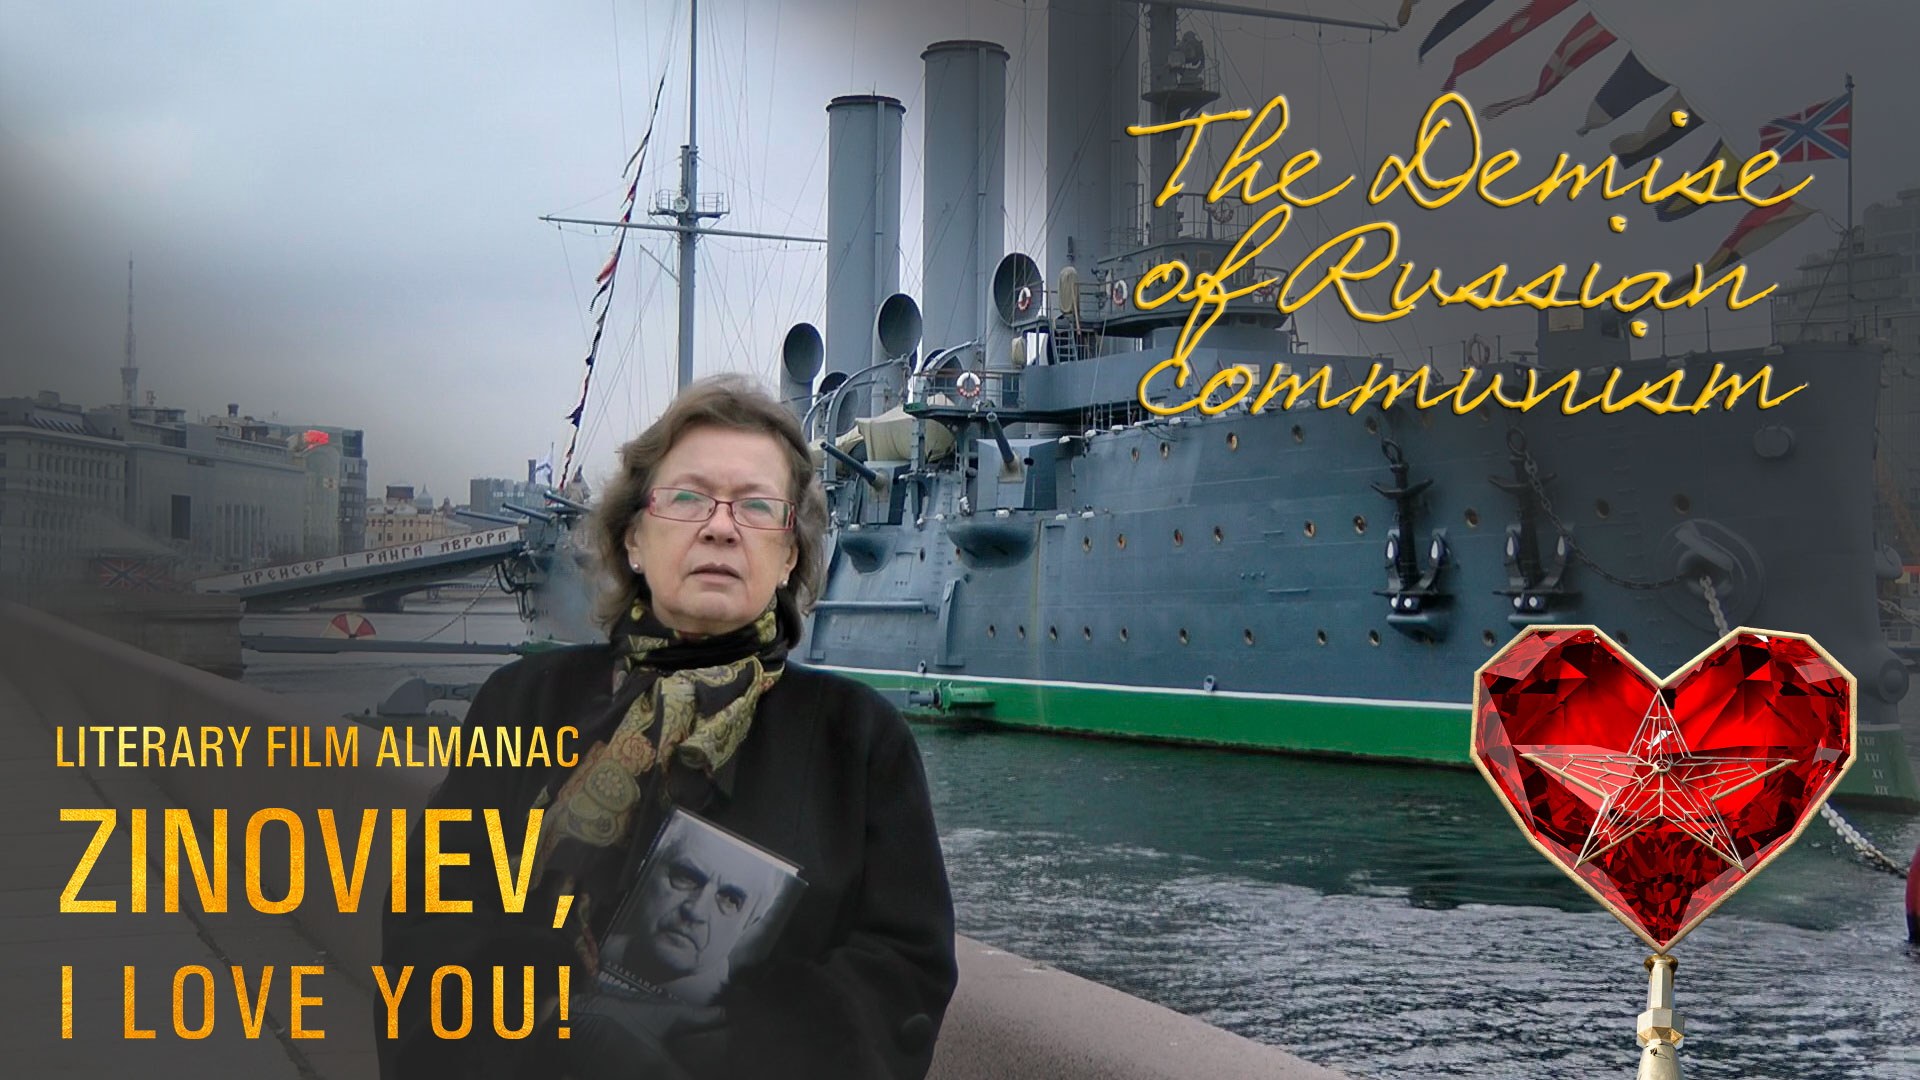 “The demise of the Russian communism” (literary film almanac “Zinoviev, I Love You!”)